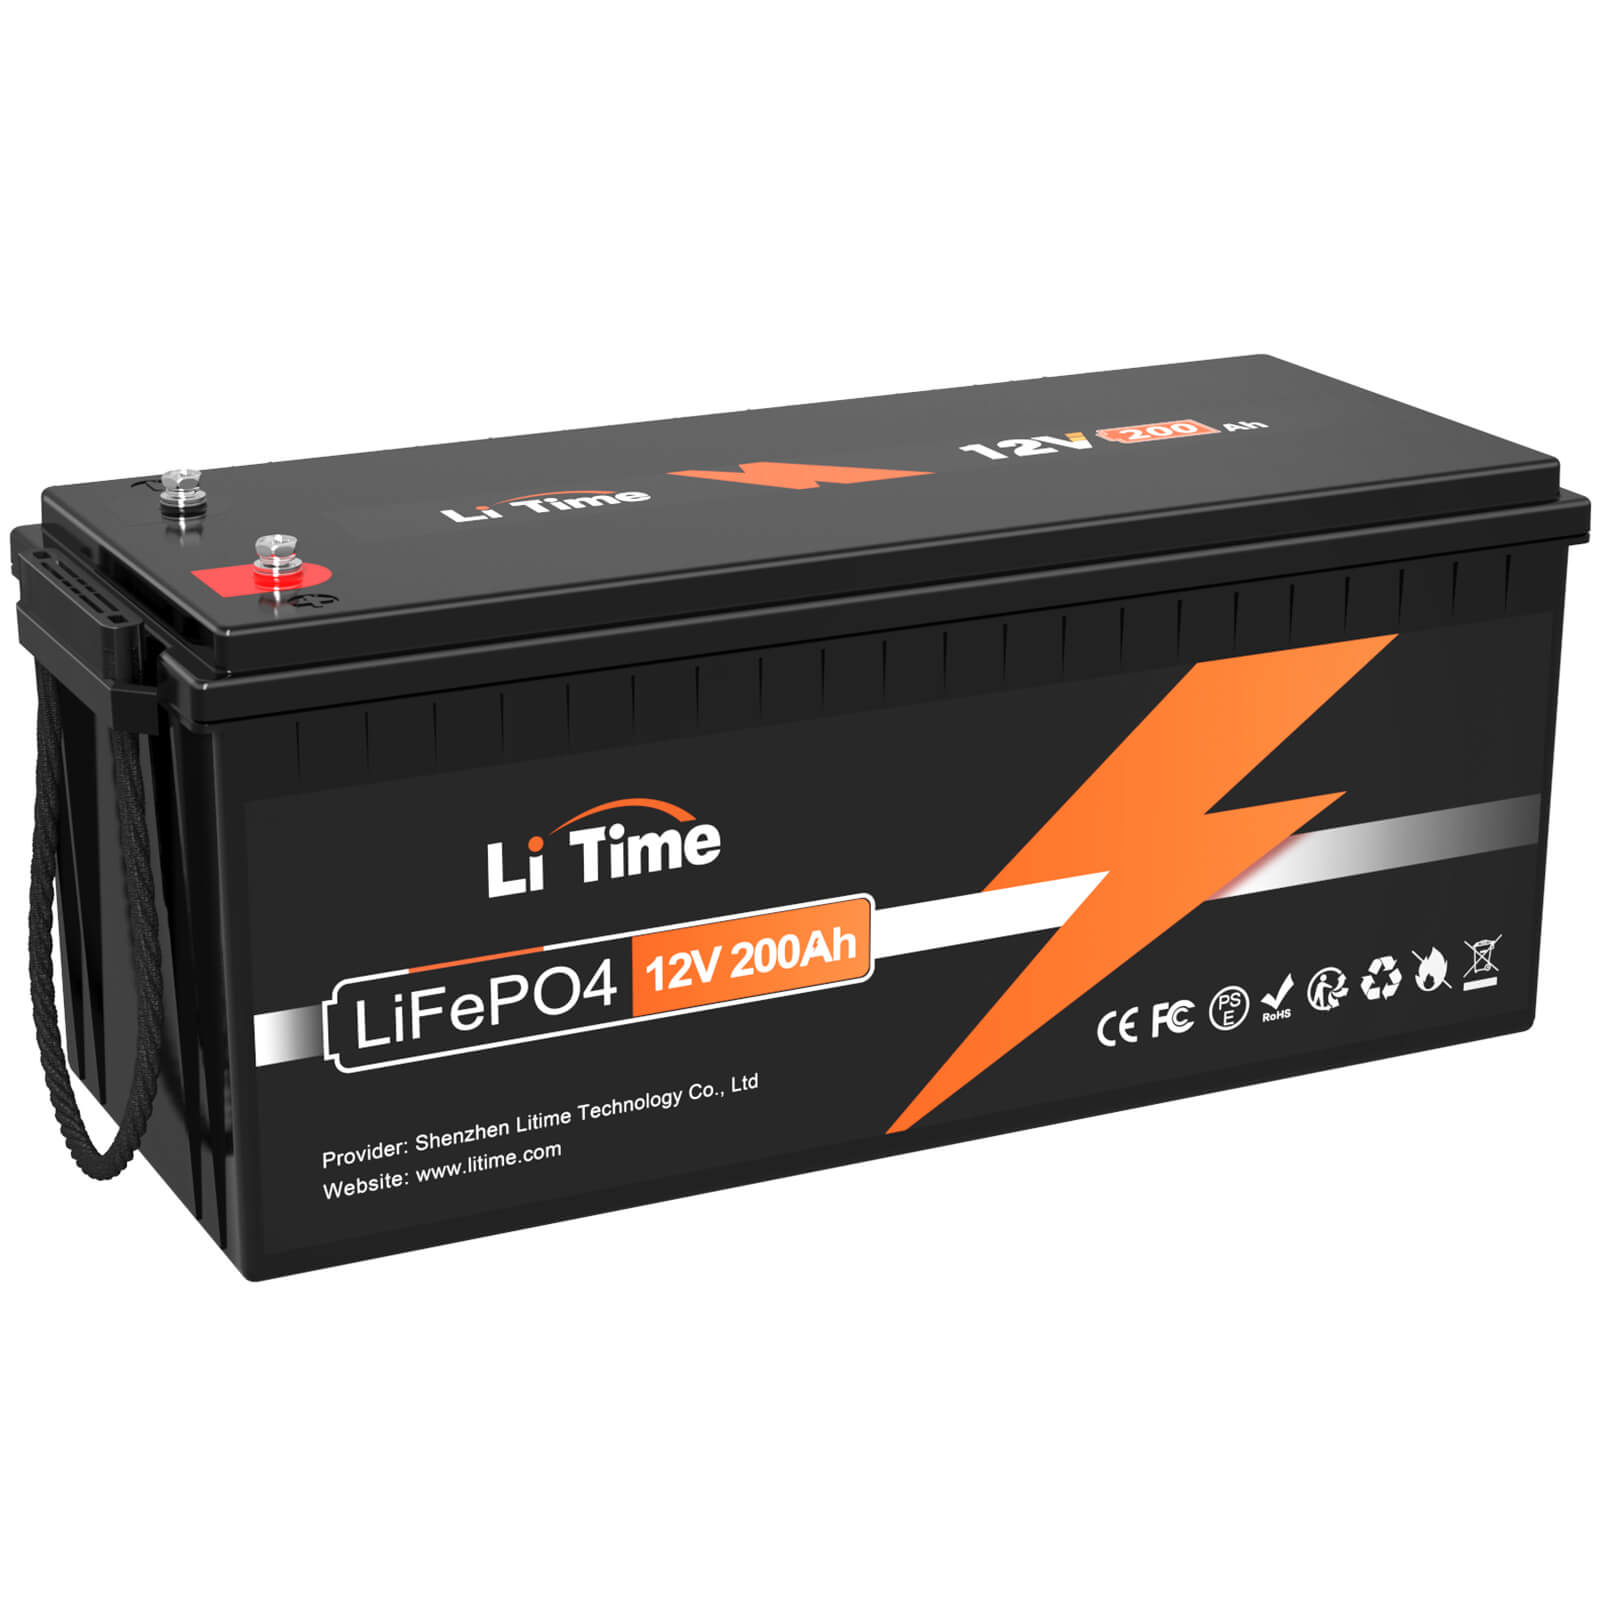 LiTime 12V 200Ah LiFePO4 lithium battery – LiTime-DE